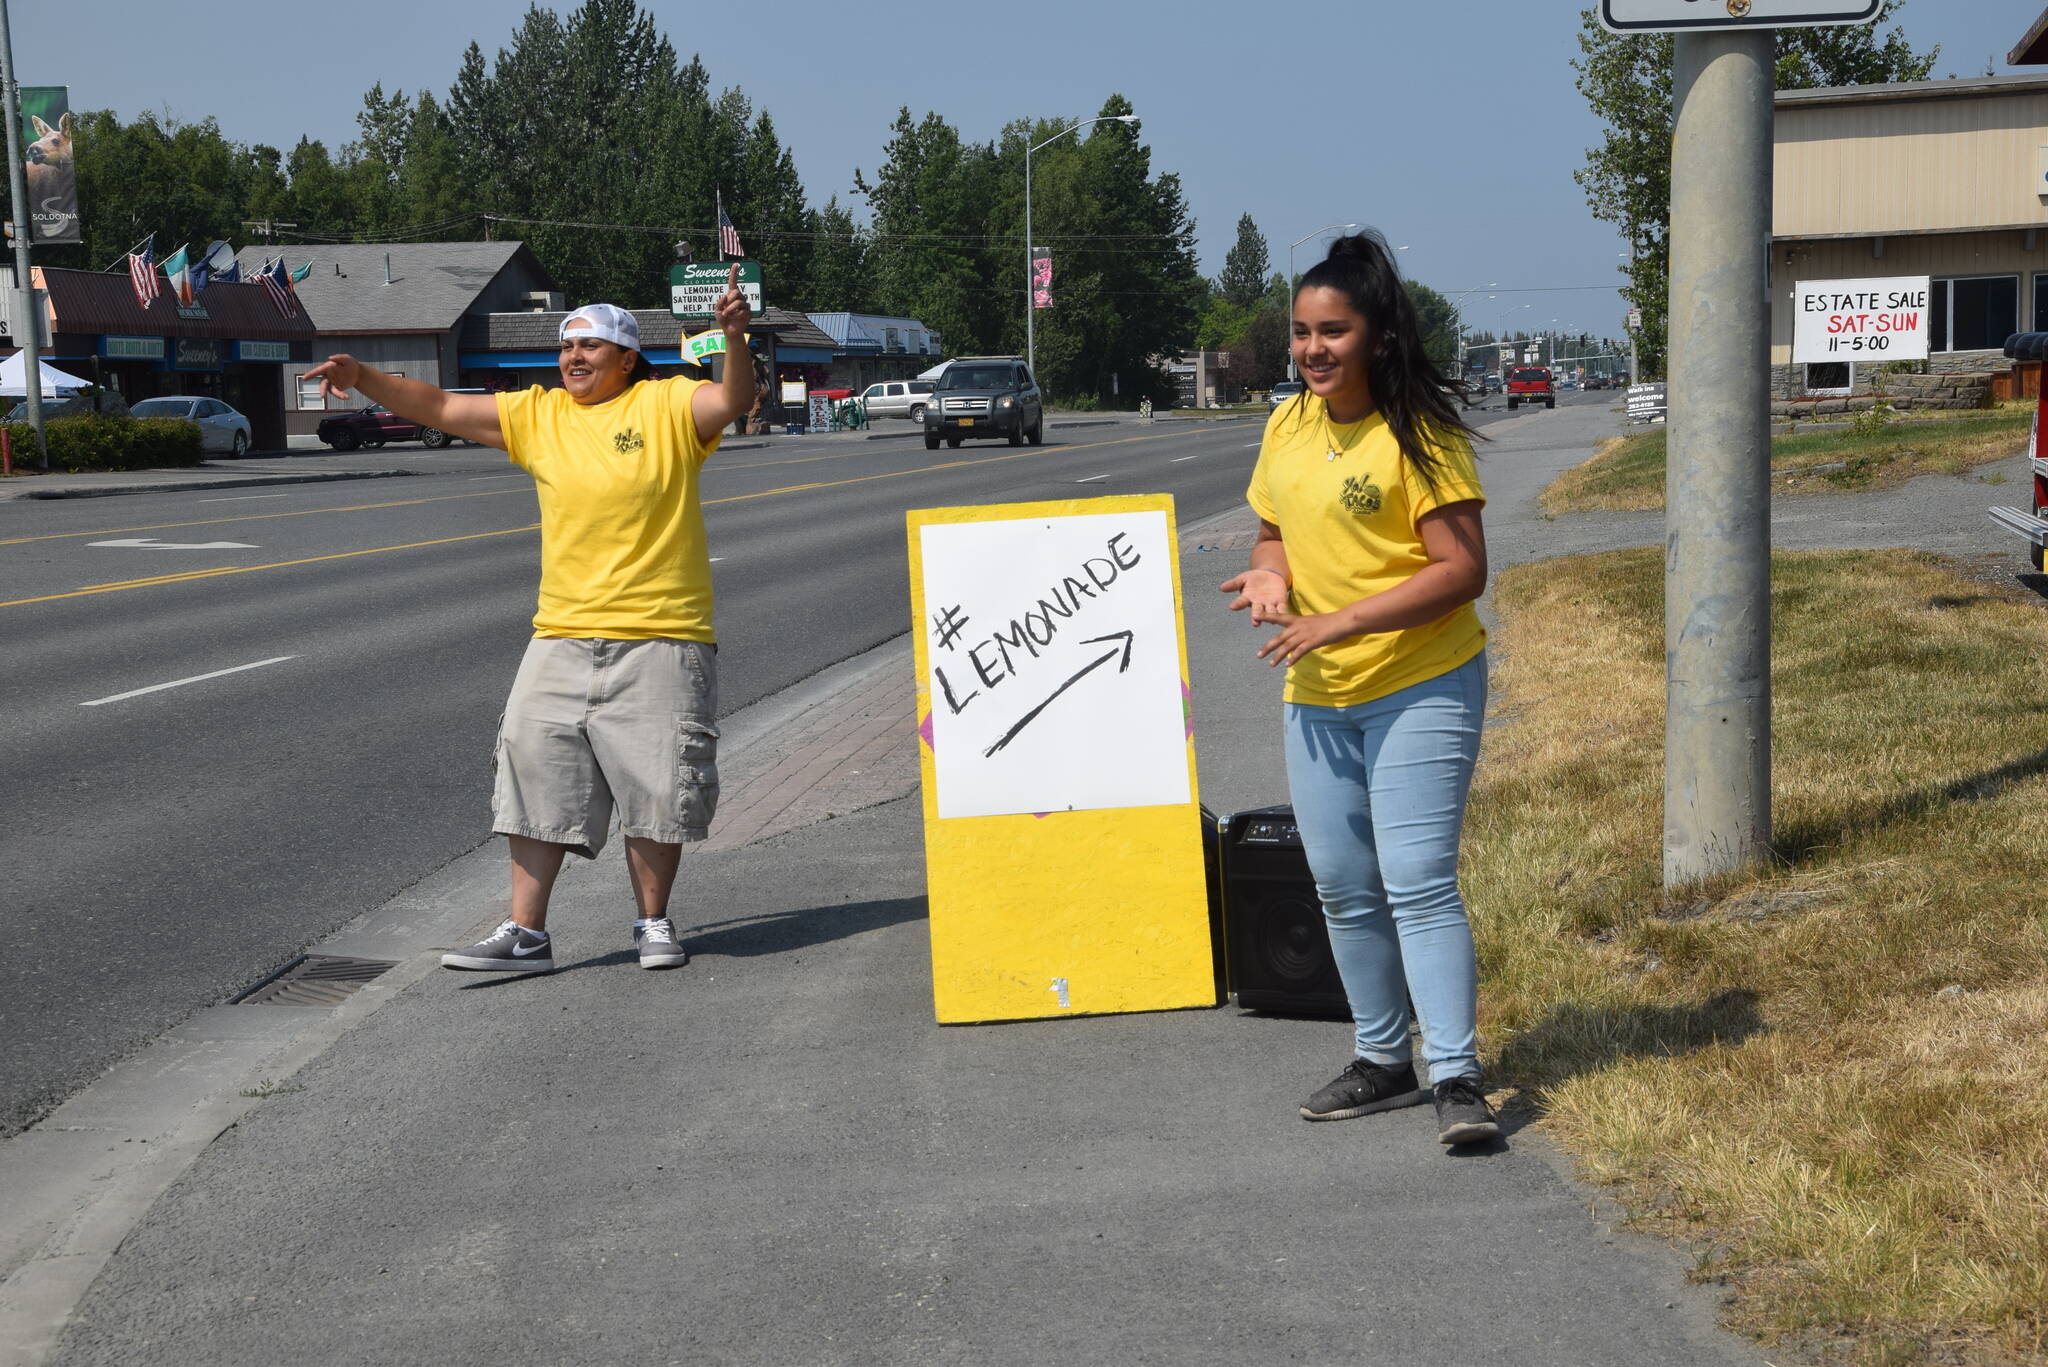 Nila Sanchez, left, and Alexa Menzel advertise their lemonade business along the Kenai Spur Highway during Lemonade Day in Soldotna, Alaska, on June 29, 2019. (Photo by Brian Mazurek/Peninsula Clarion)